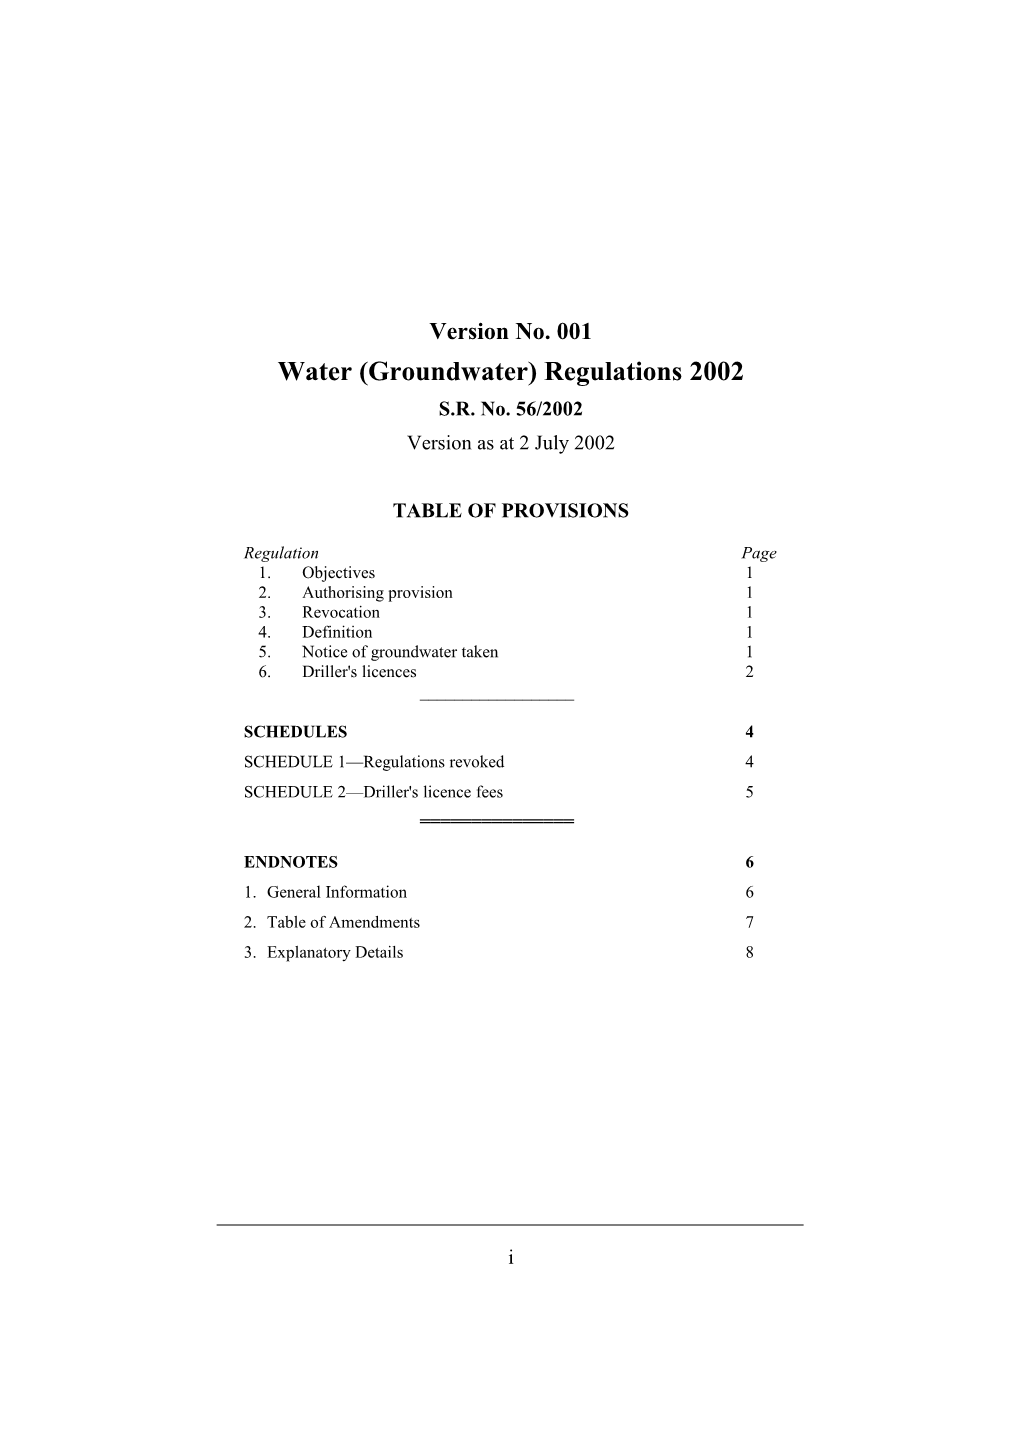 Water (Groundwater) Regulations 2002